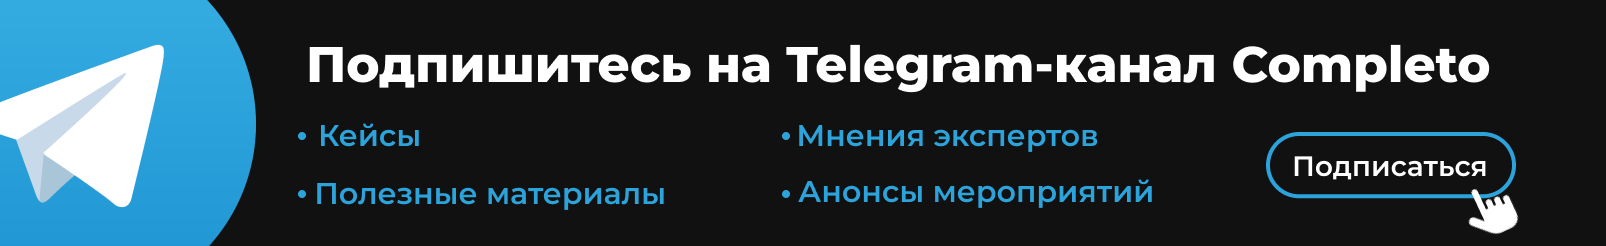 Telegram-канал Completo